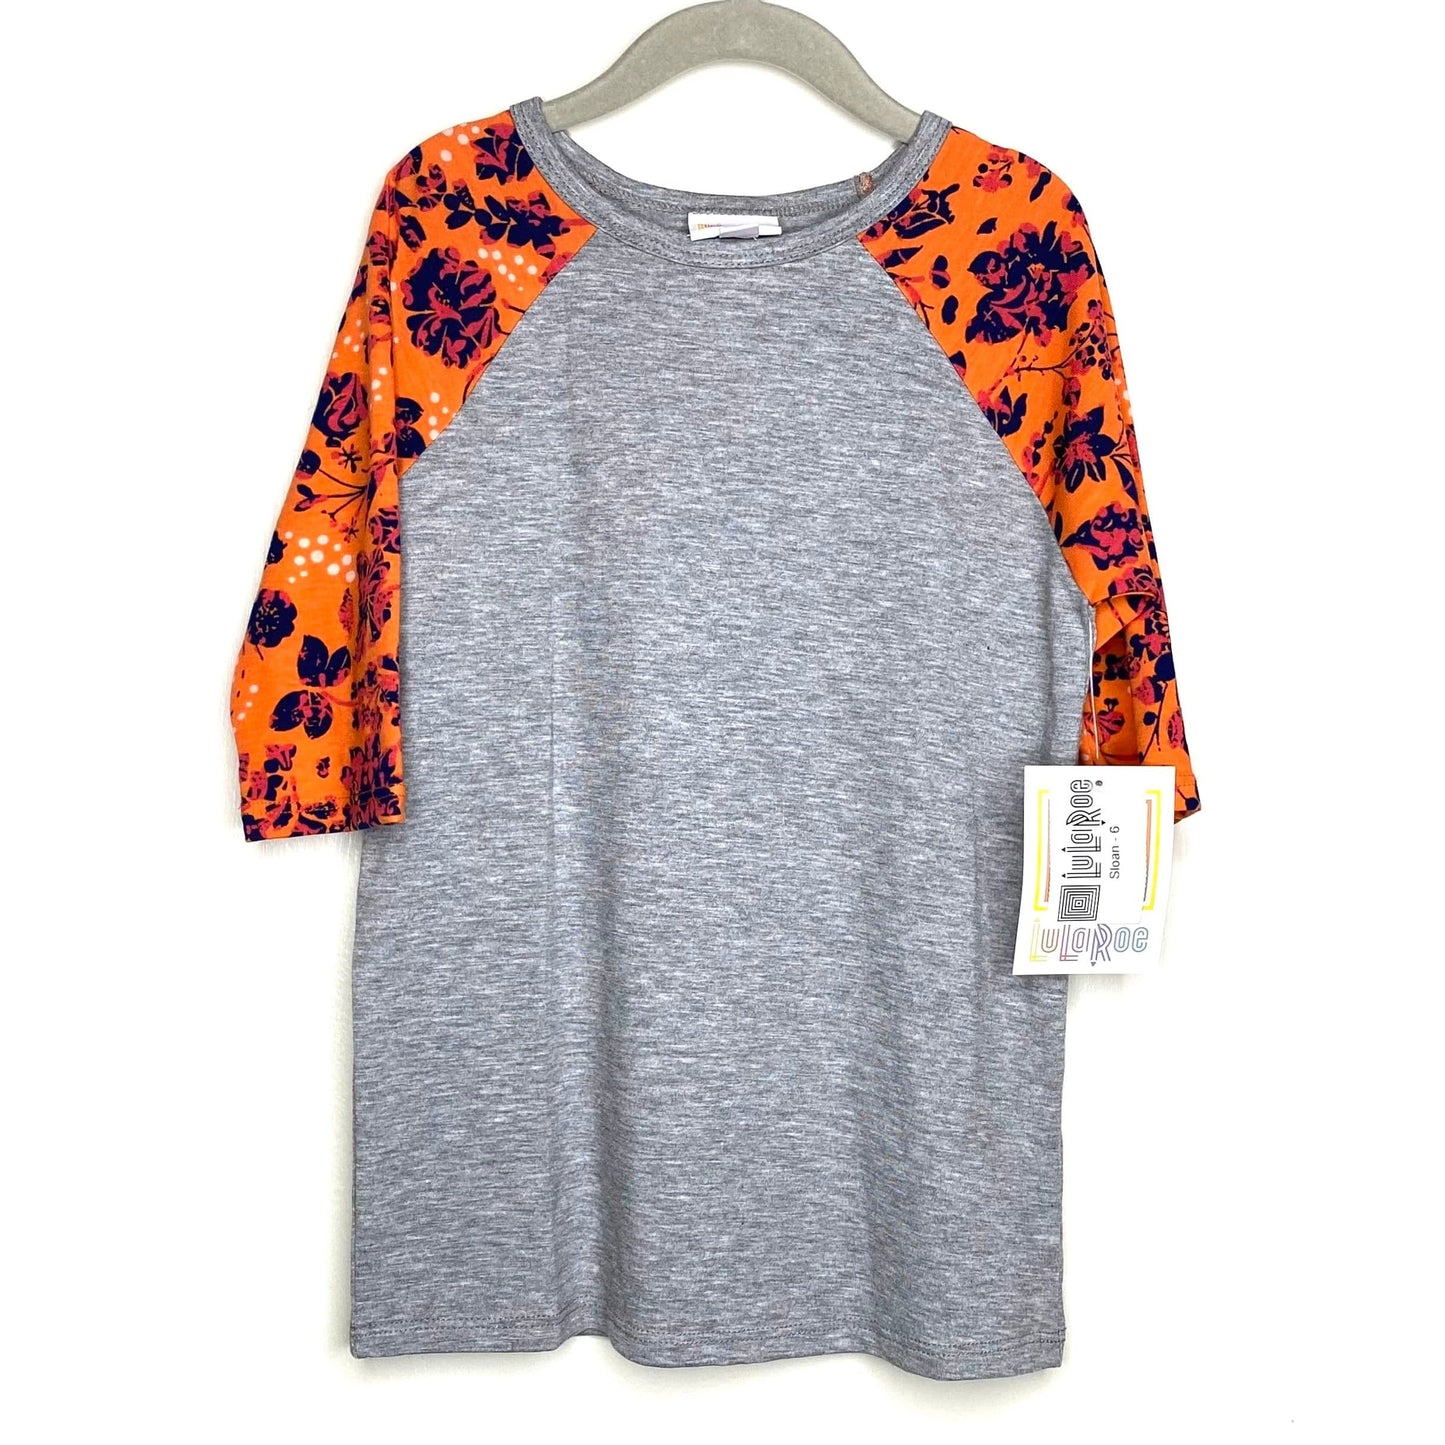 LuLaRoe Kids Unisex 6 Orange/Blue/Gray Sloan Heather/Floral Raglan T-Shirt 3/4 Sleeves NWT